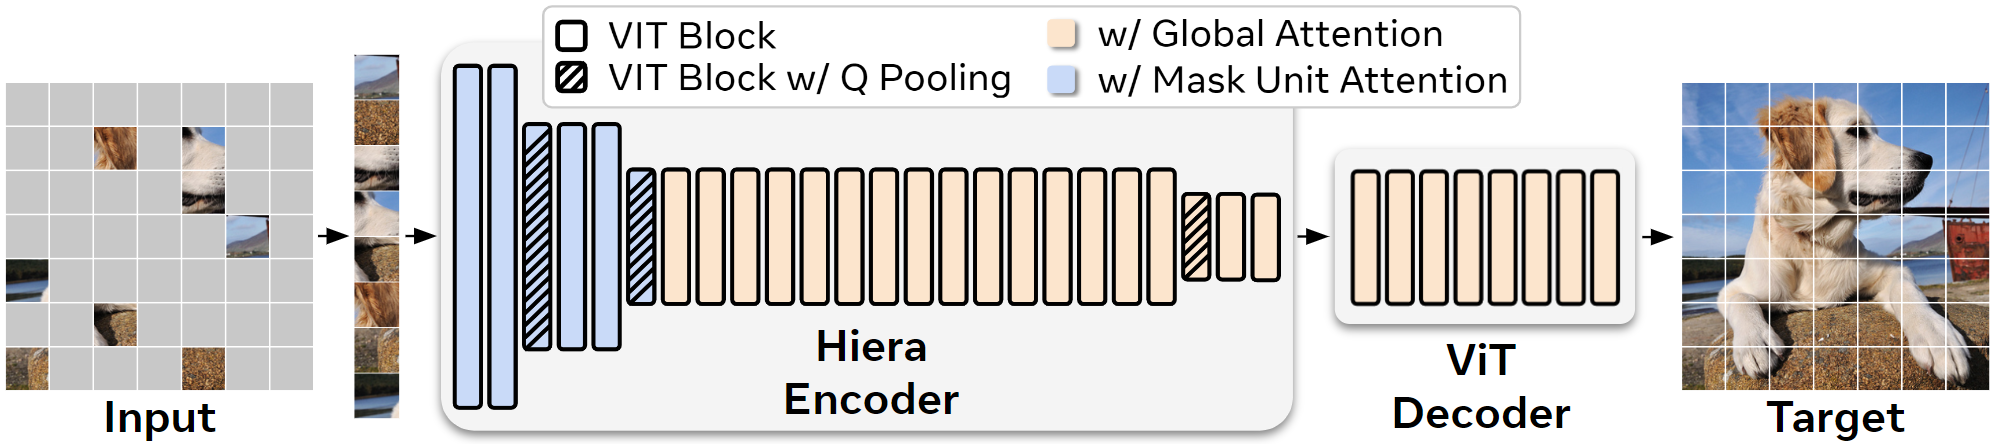 A diagram of Hiera's architecture.